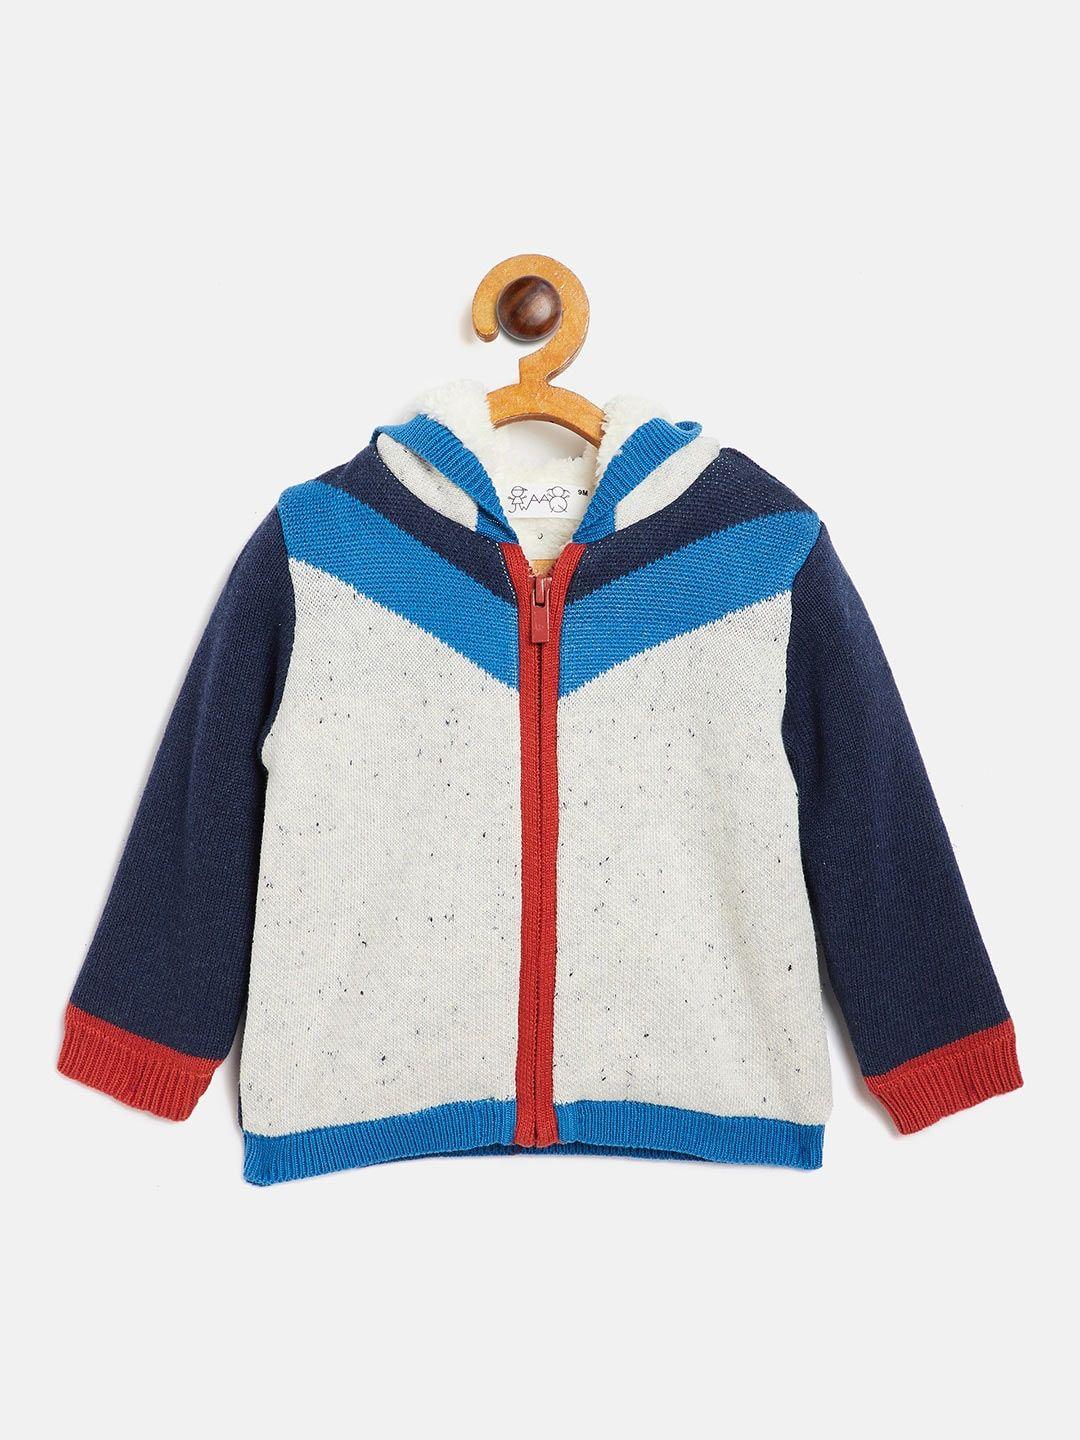 wildlinggs infants colourblocked hooded cardigan sweater